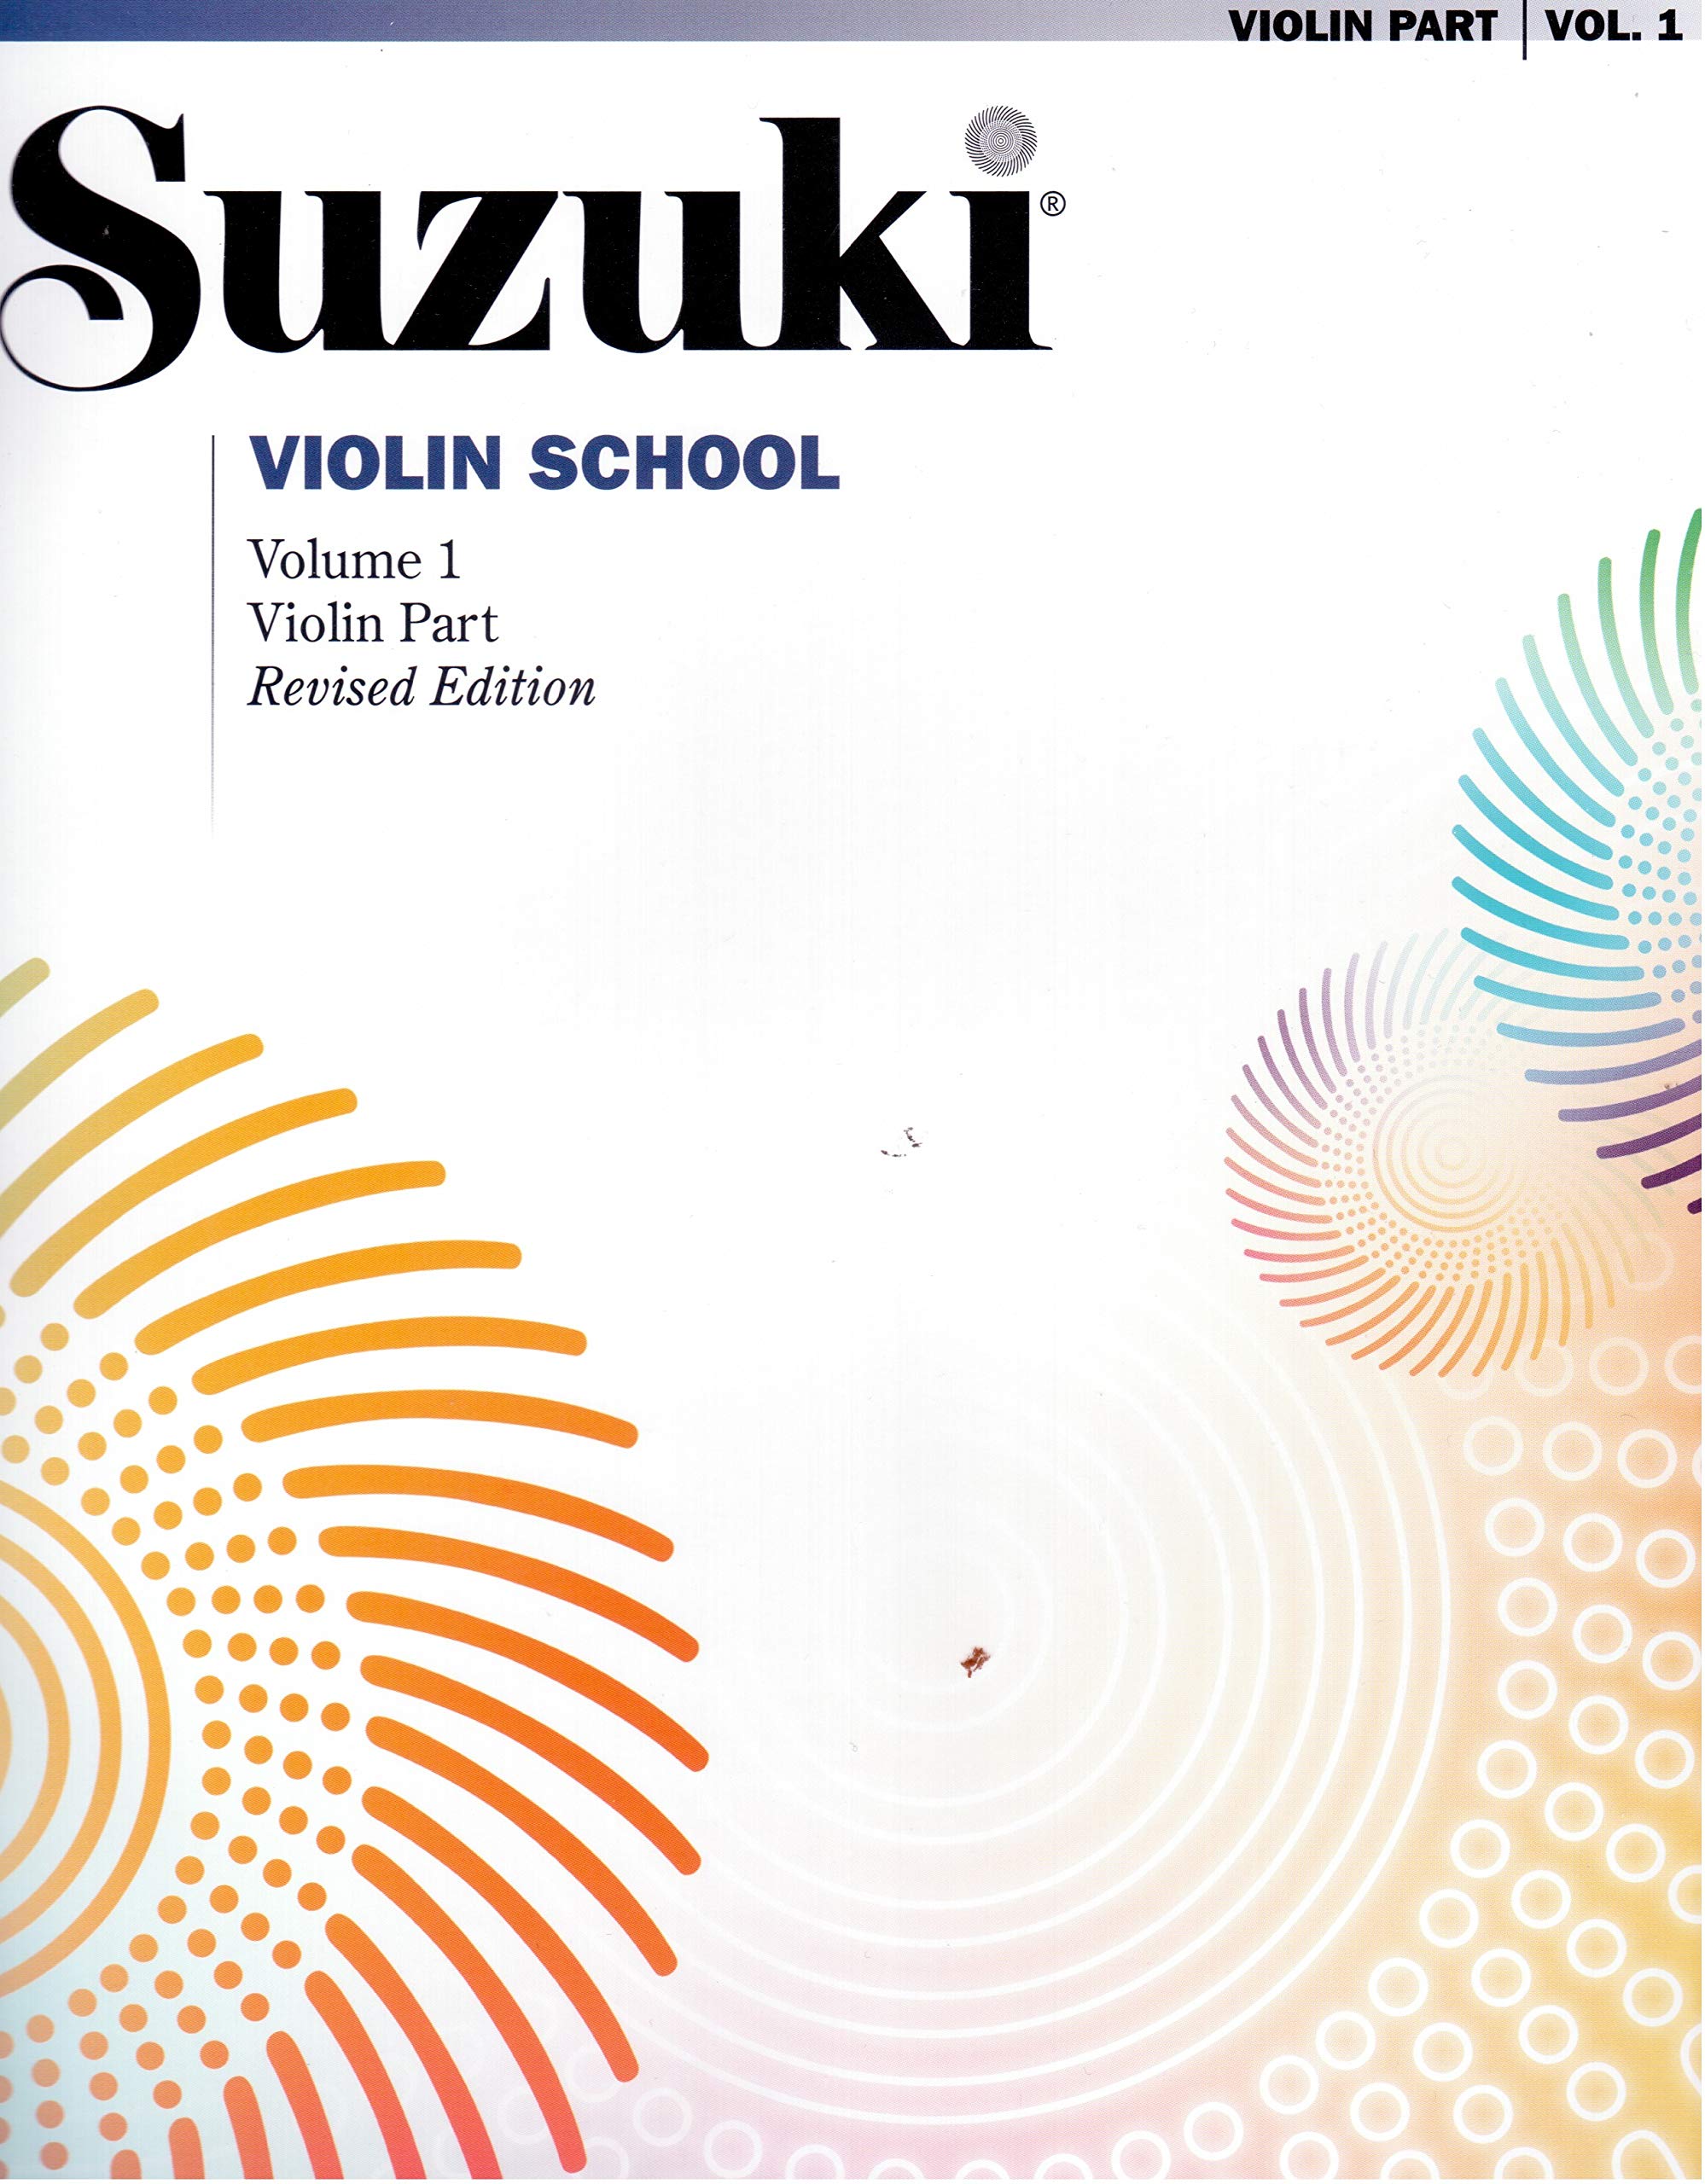 Picture of 'Suzuki Violin School: Violin Part, Vol. 1'